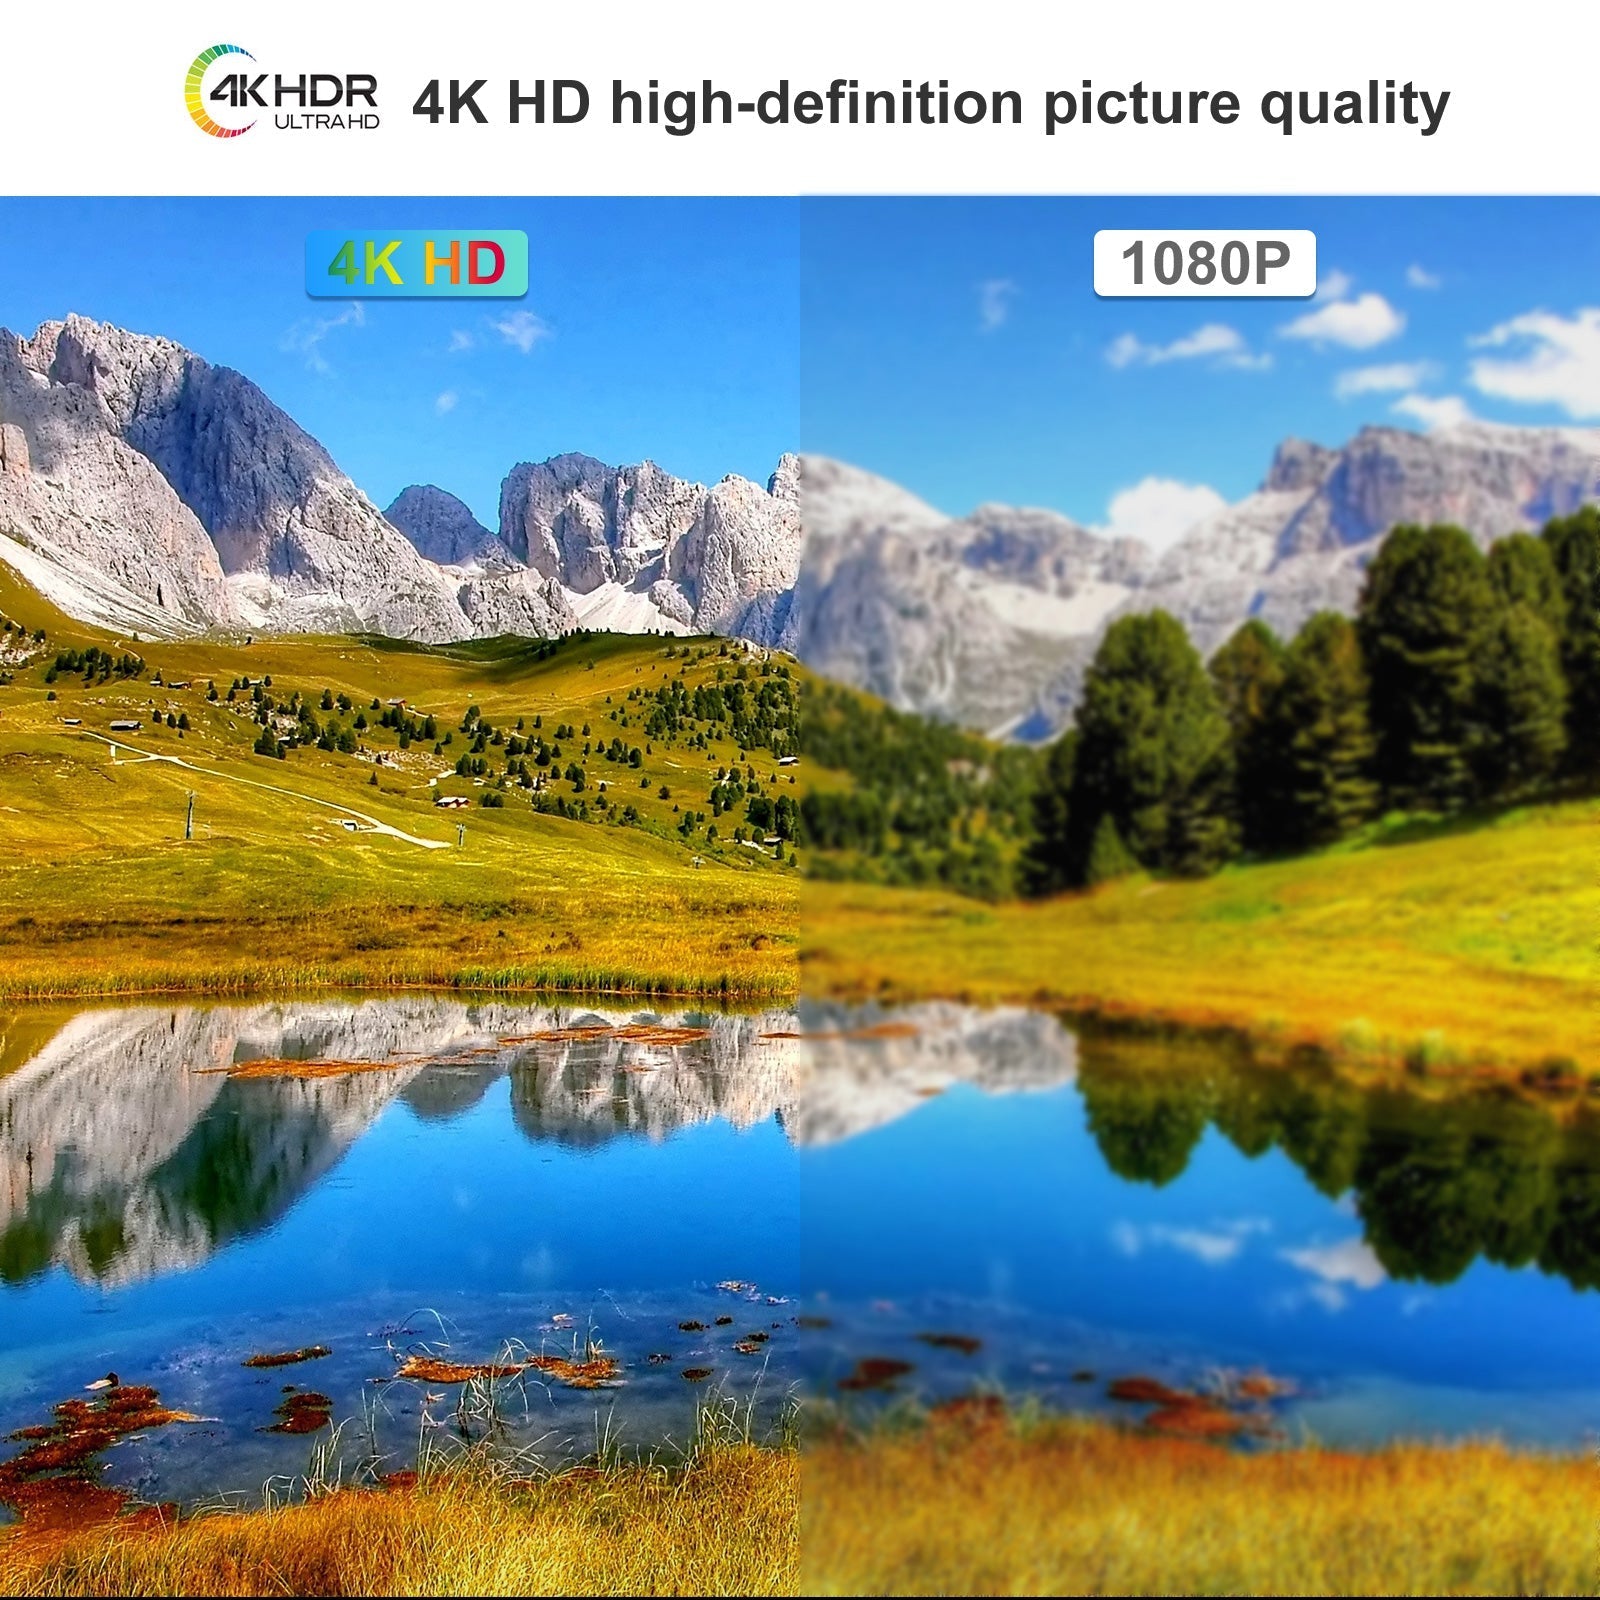 Android TV Box HAKO PRO 4GB RAM, 32GB ROM, Oficiāla Sertificēta Sistēma, S905Y4 CPU (Smart TV Konsole) - Reltek